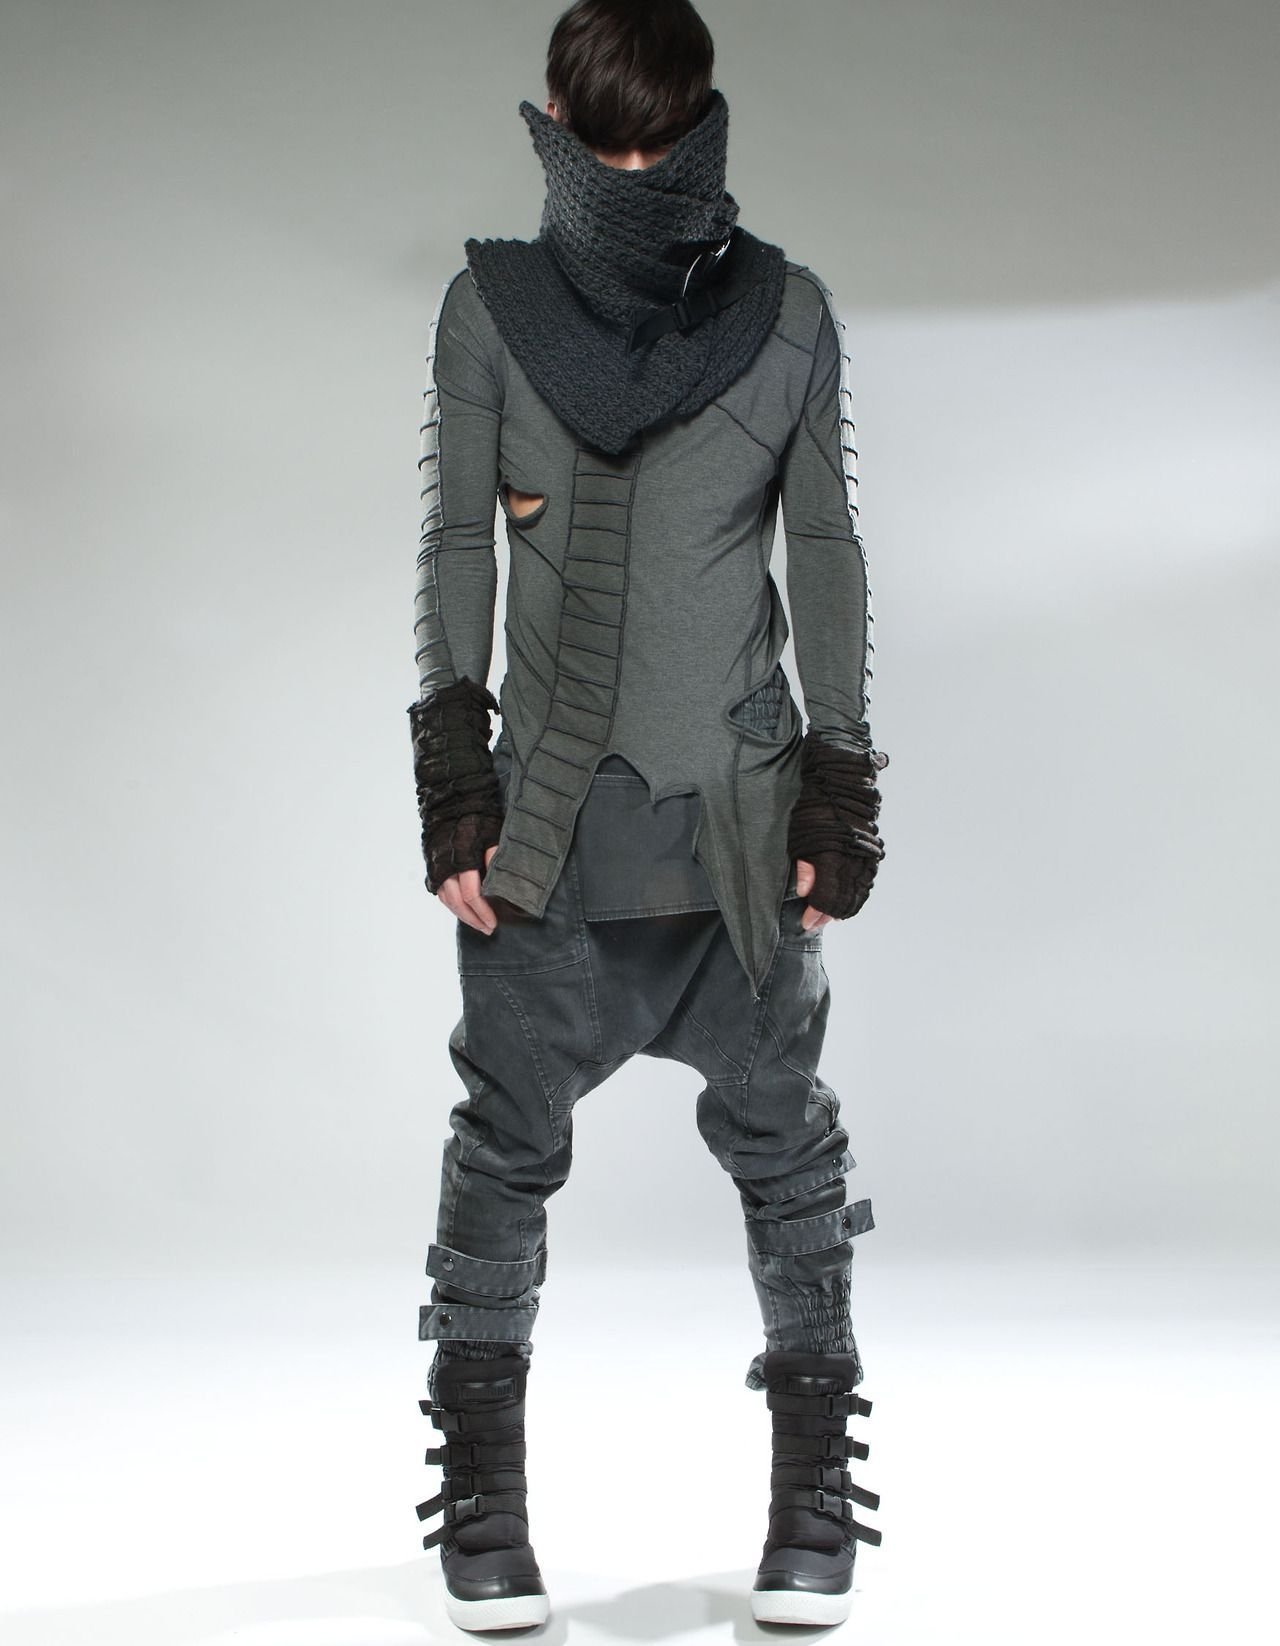 Cyberpunk clothes style фото 83